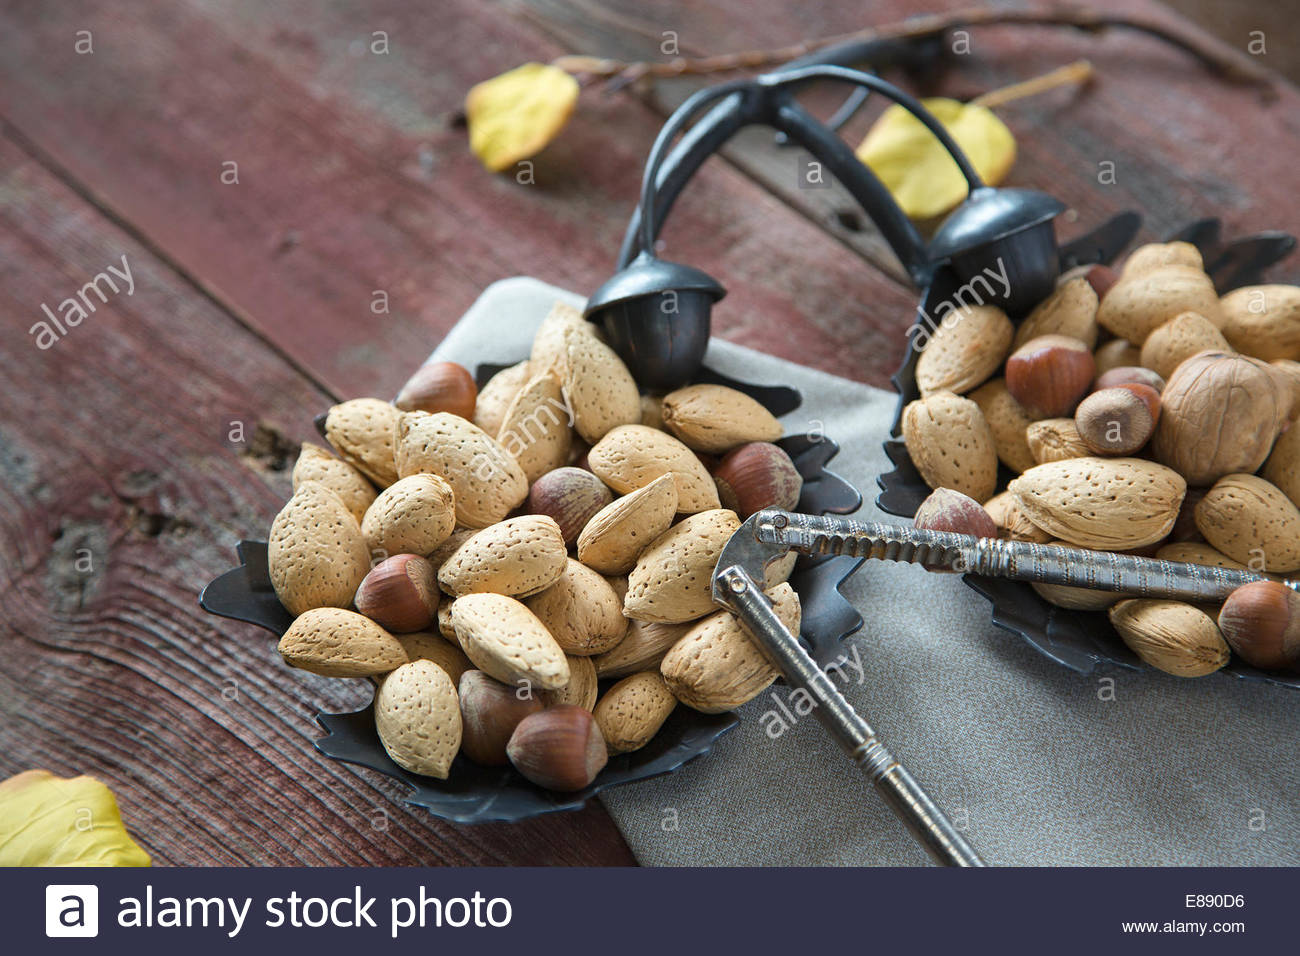 Hazelnuts and almond nuts with nutcracker Stock Photo